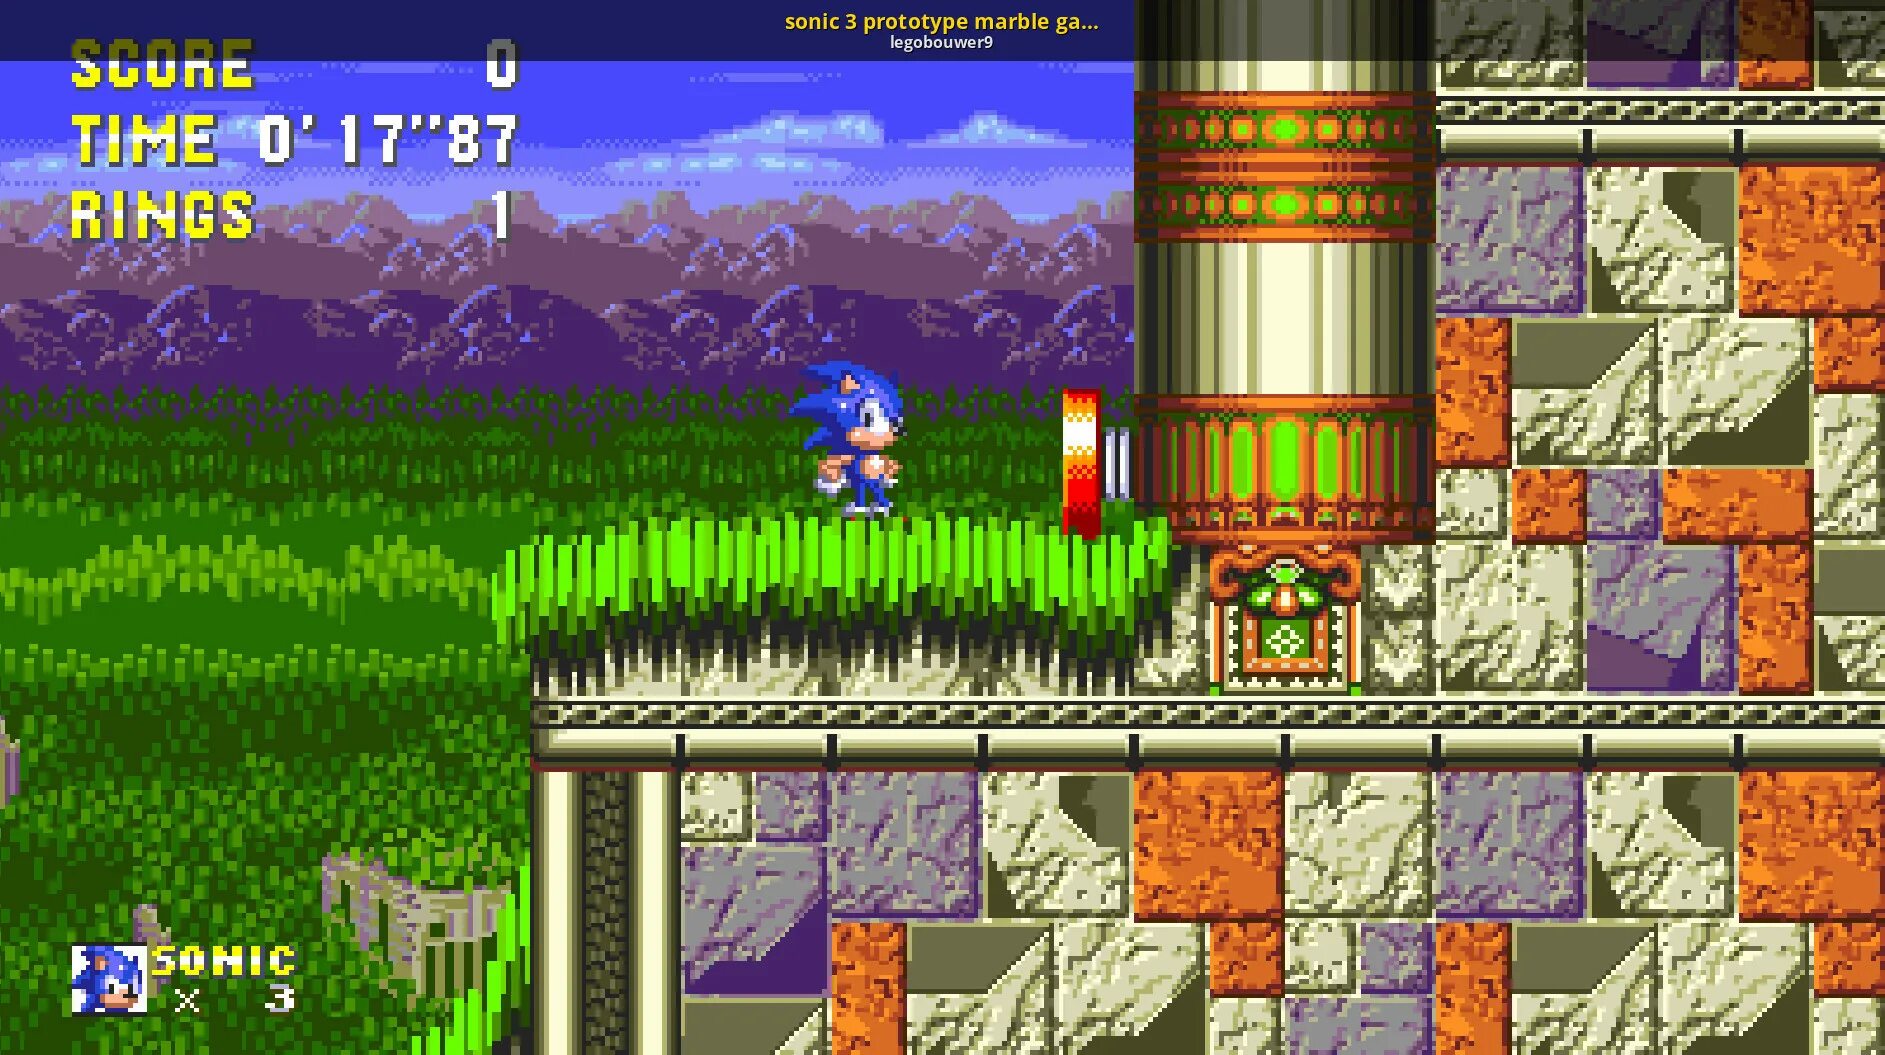 Sonic 3 Marble Garden. Sonic 3 1993 Prototype. Соник 3 прототип. Marble Garden Zone Sonic 3 арт. Sonic 3 island